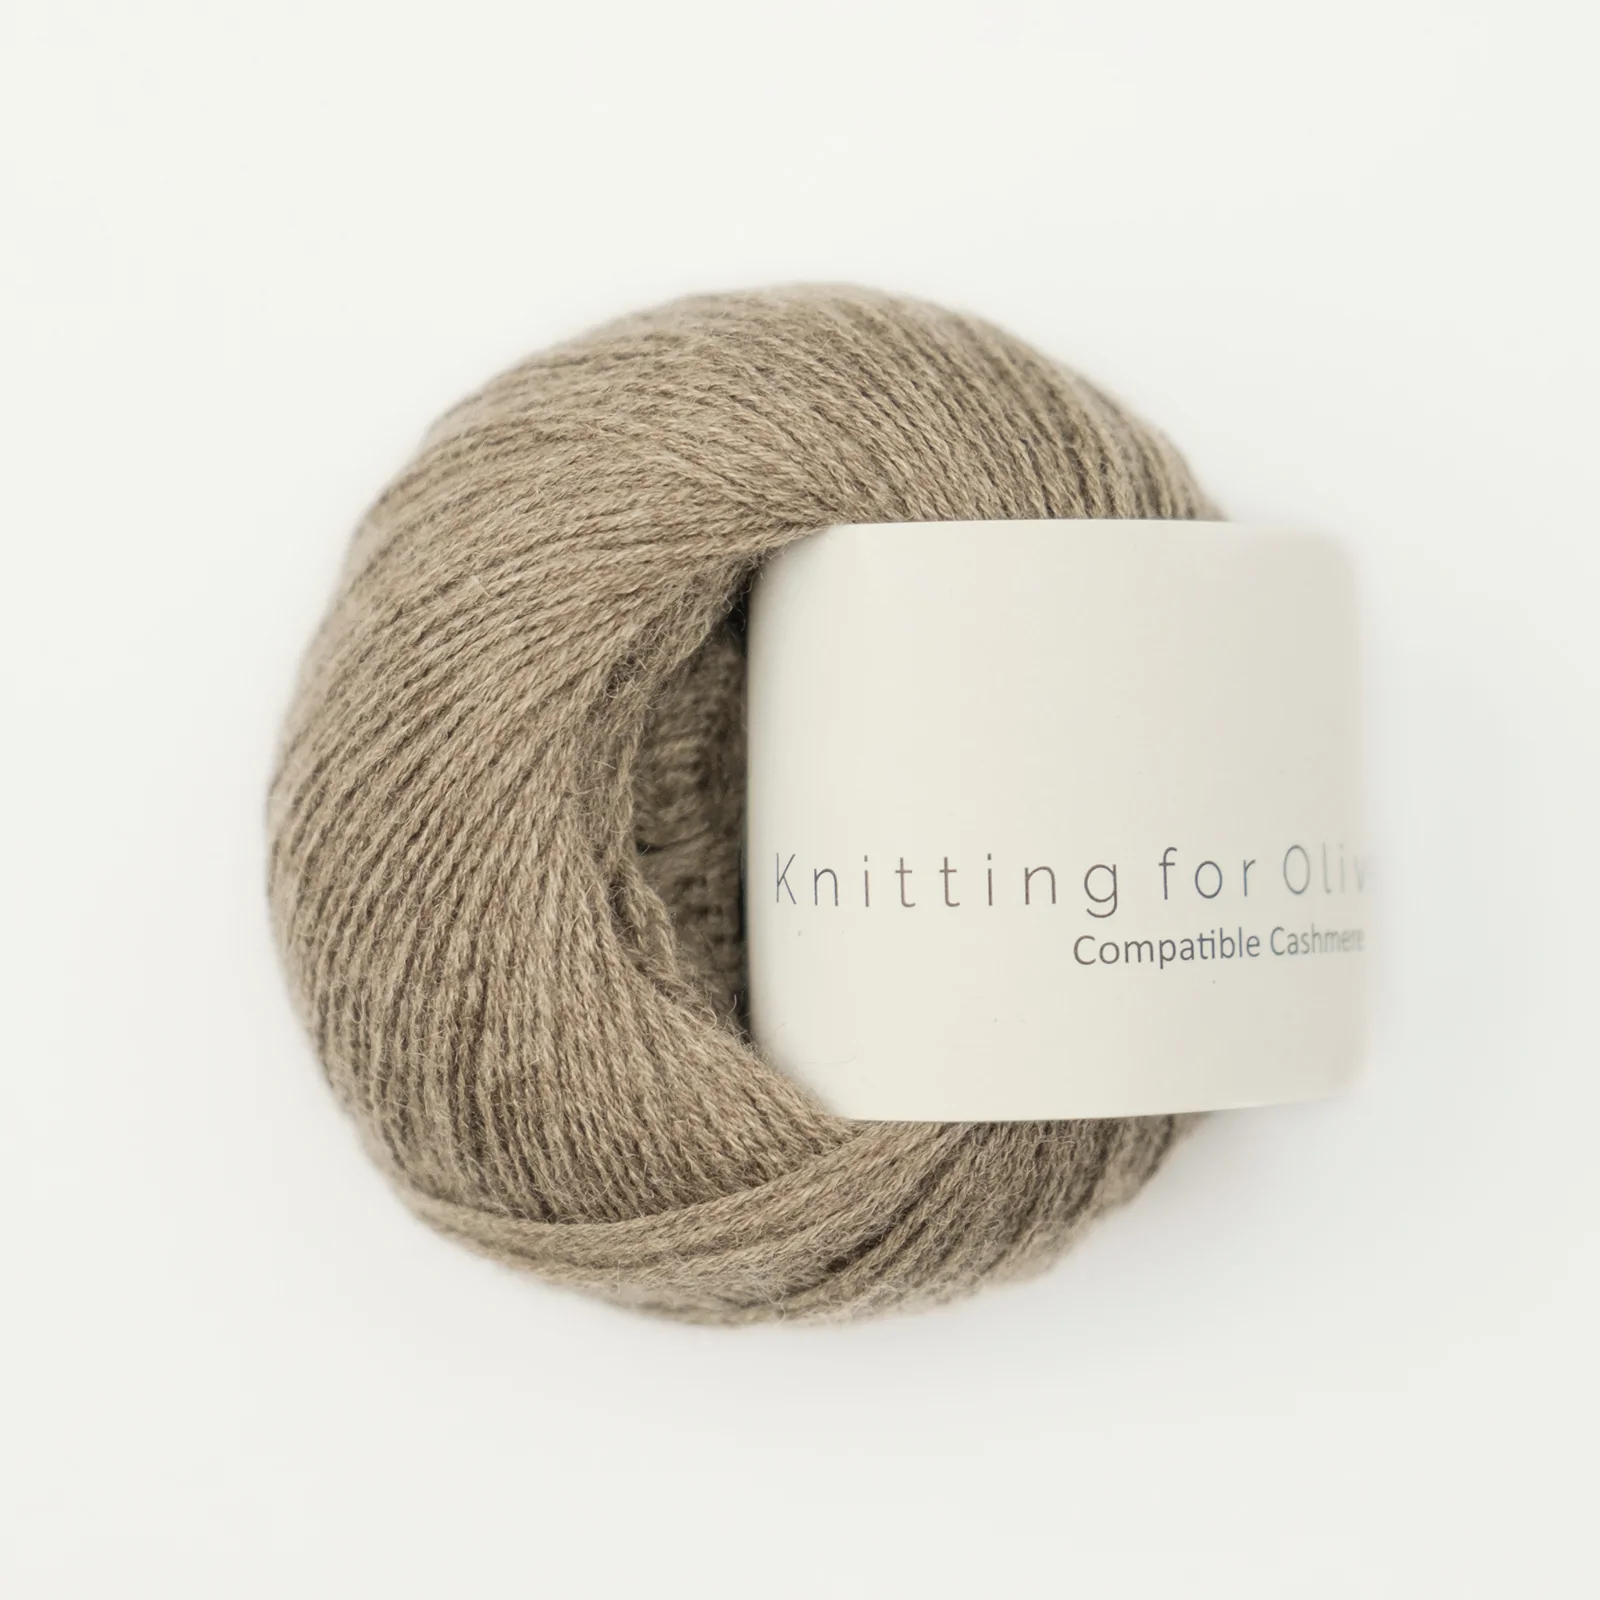 compatible cashmere knitting for olive | compatible cashmere: linen